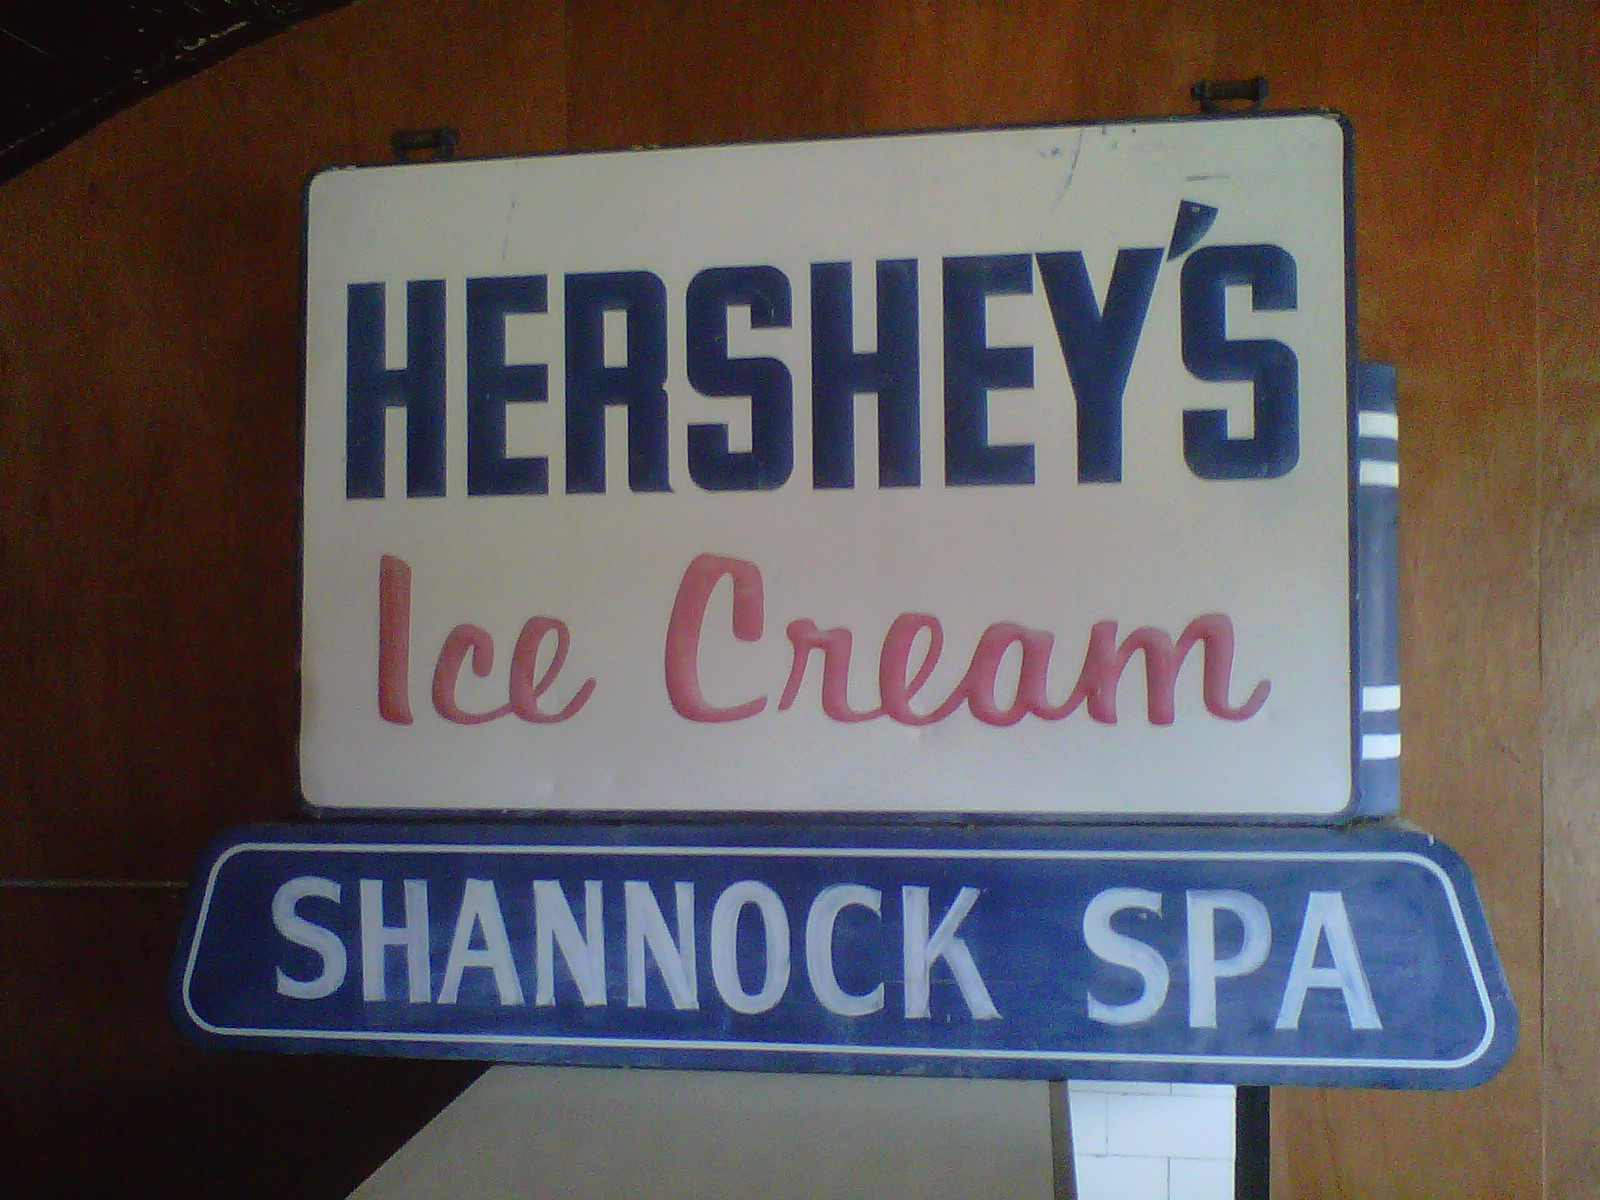 Shannock Spa - Sign